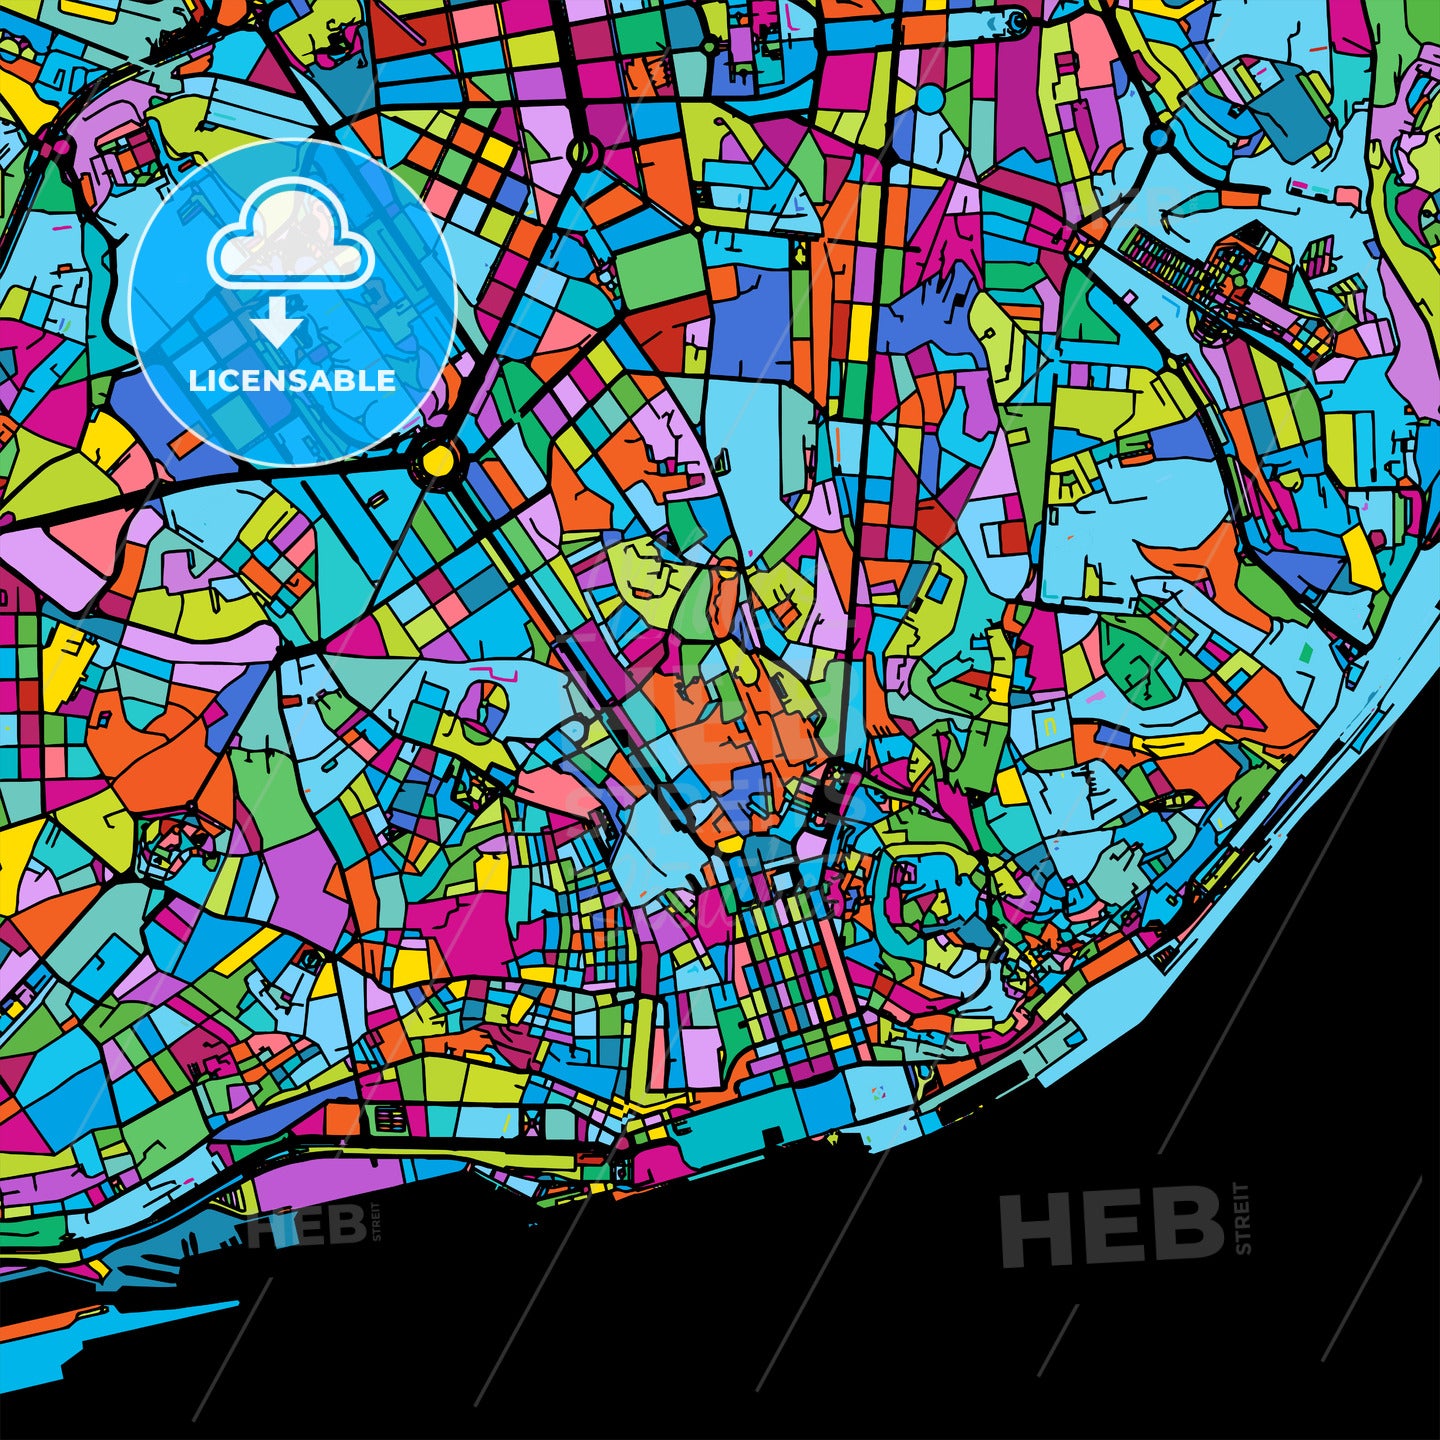 Lisbon Area Colorful Vector Map on Black